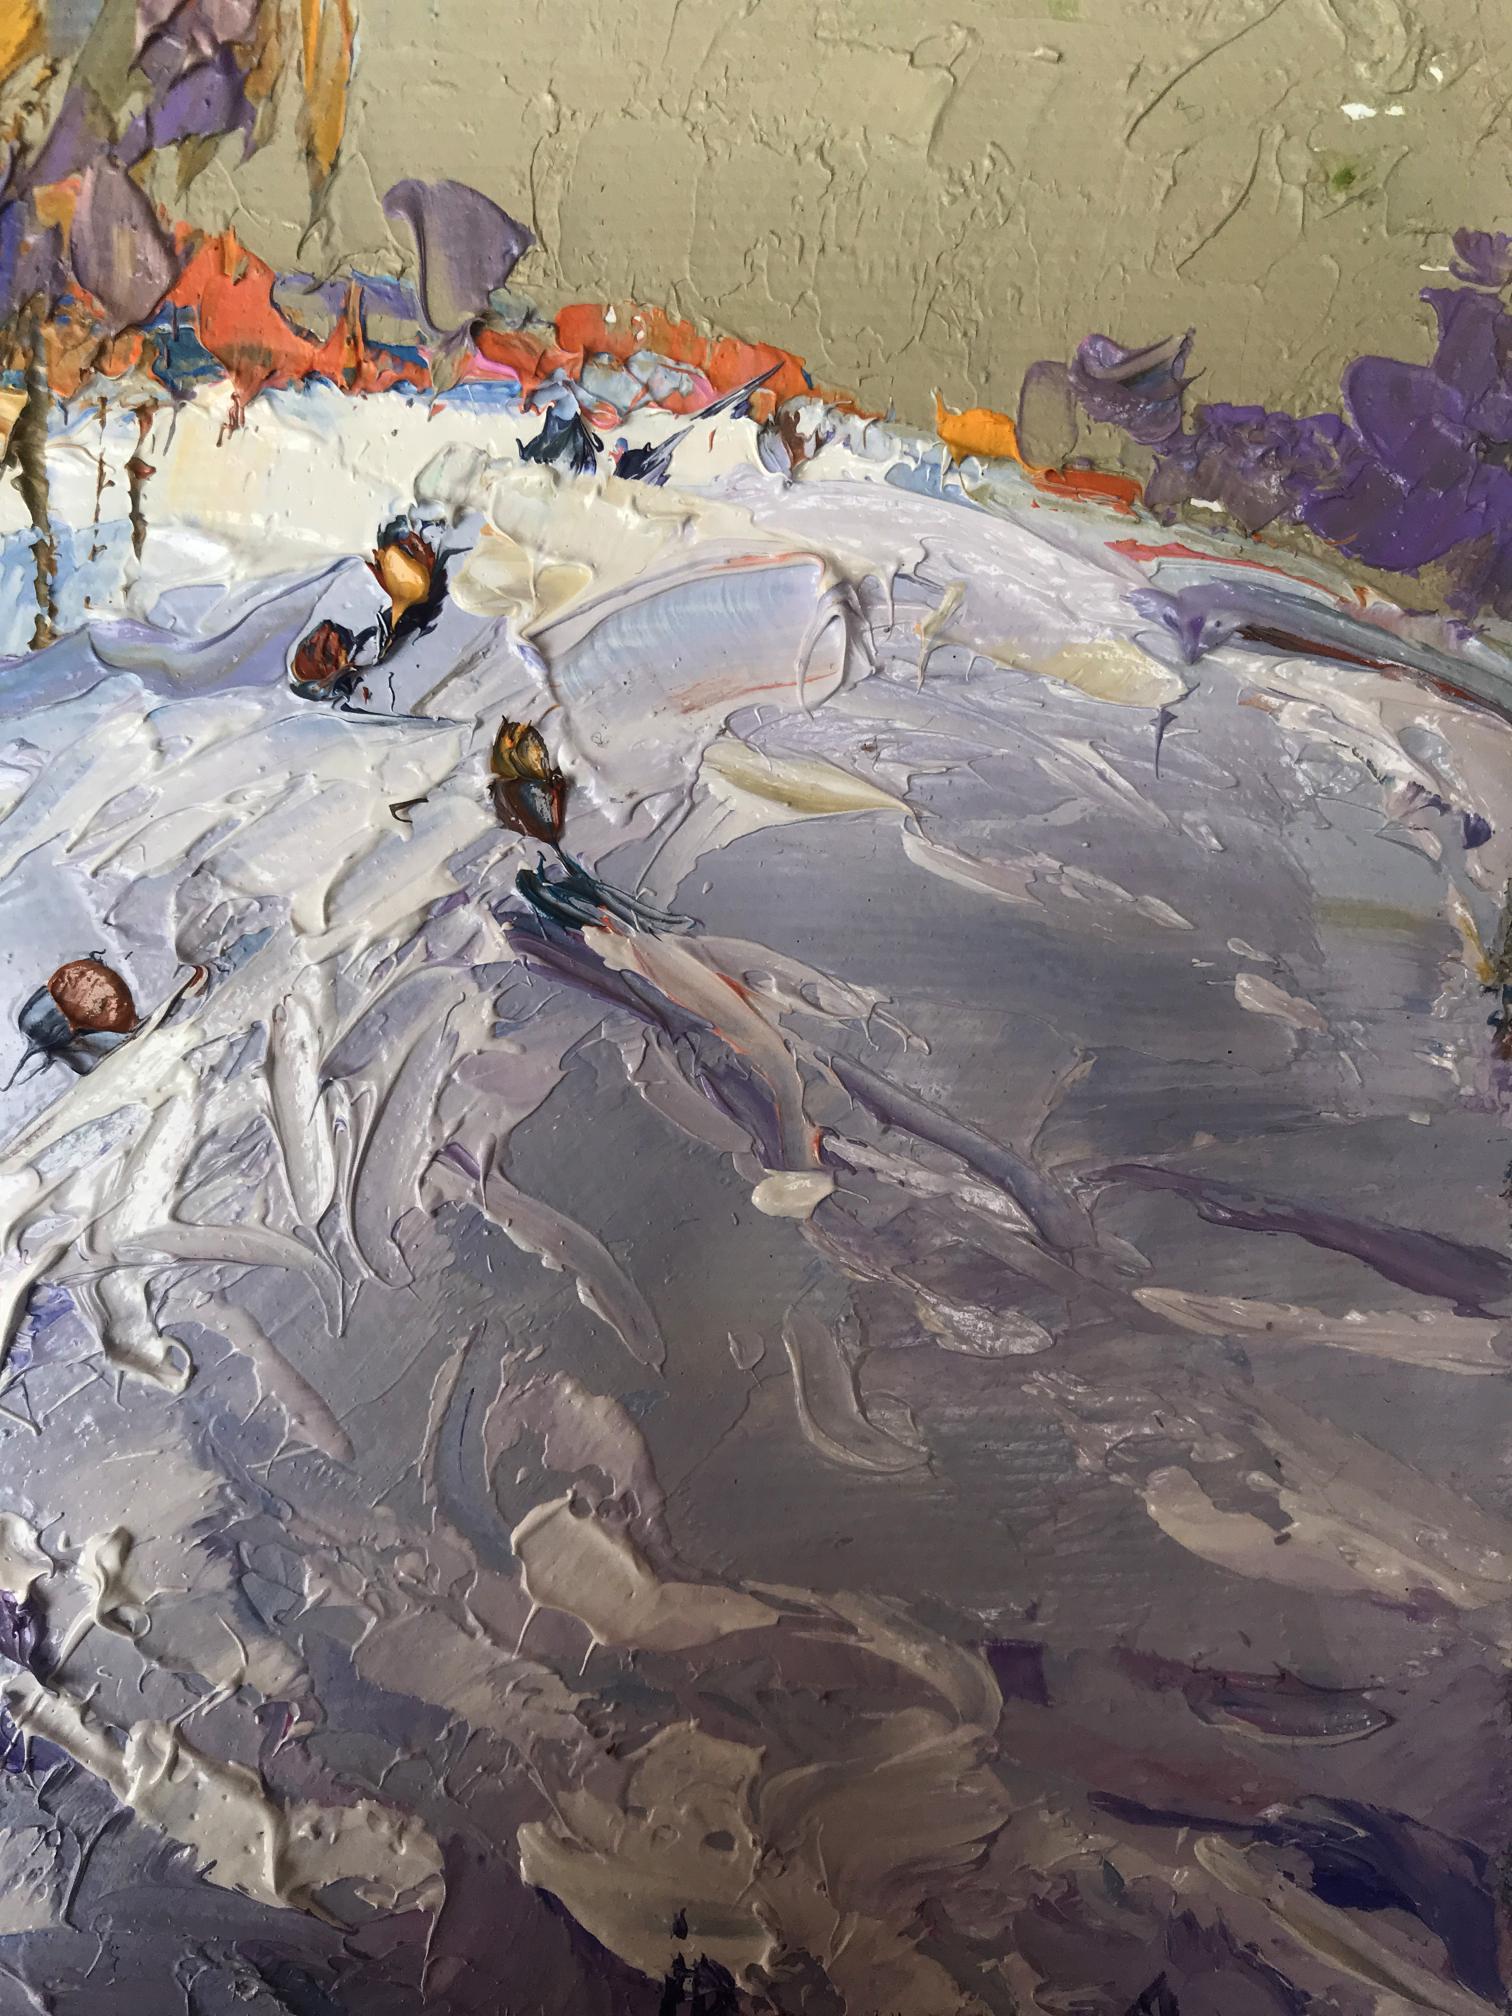 Frozen Landscape: Oksana Ivanyuk's Oil Painting of Snowy Hills